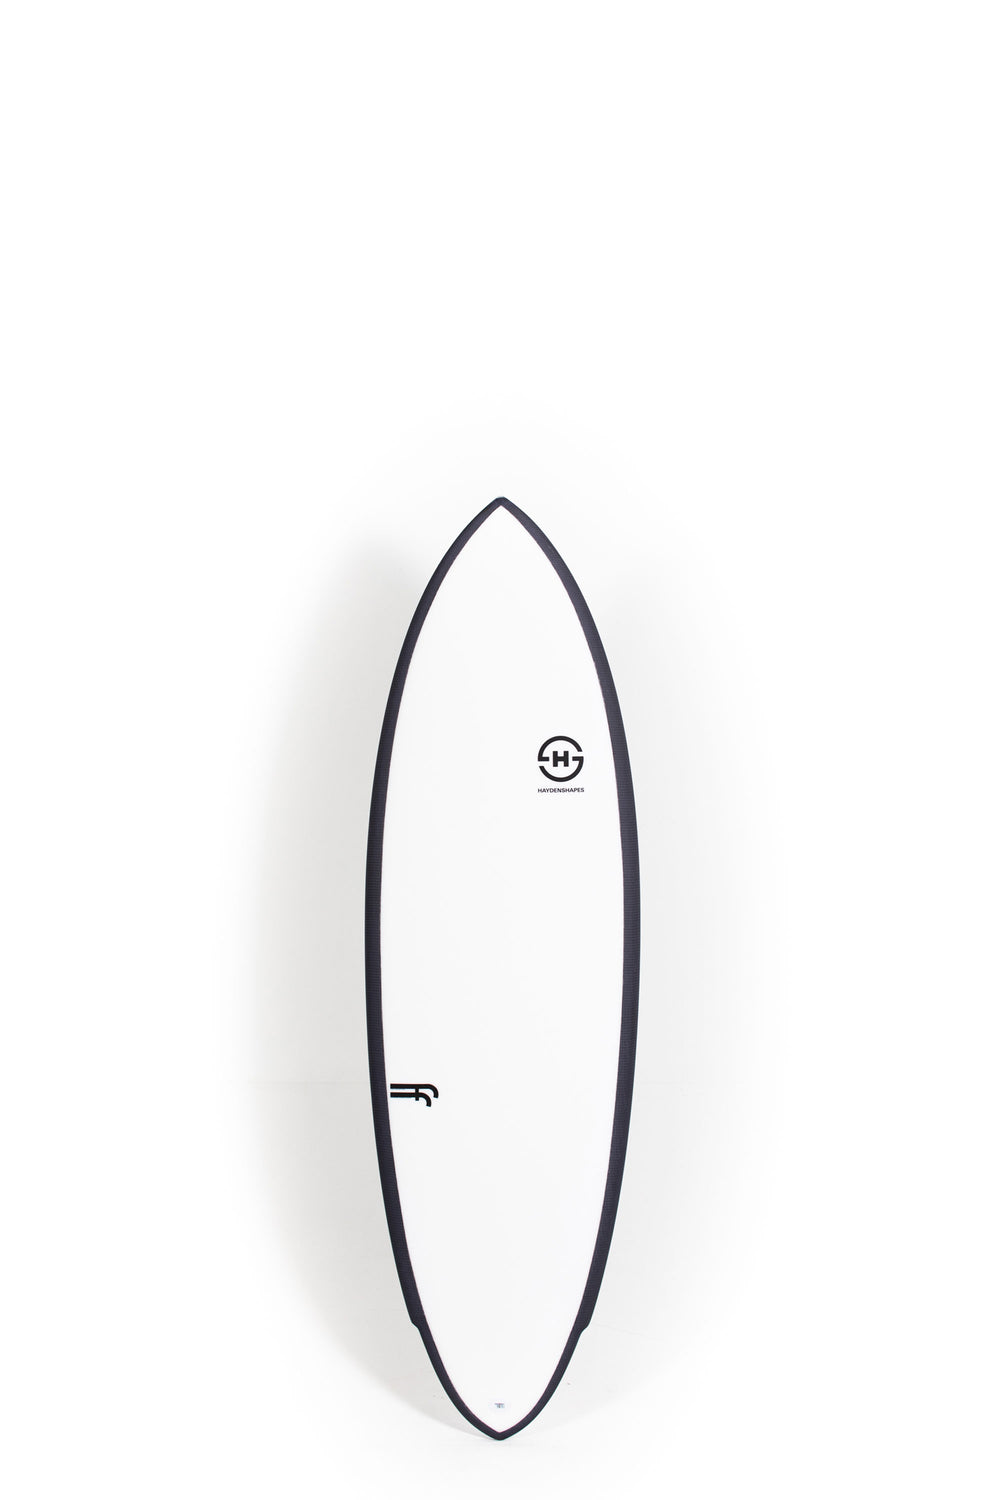 Pukas Surf Shop - Haydenshapes Surfboard - HYPTO KRYPTO TWIN PIN - 5'10